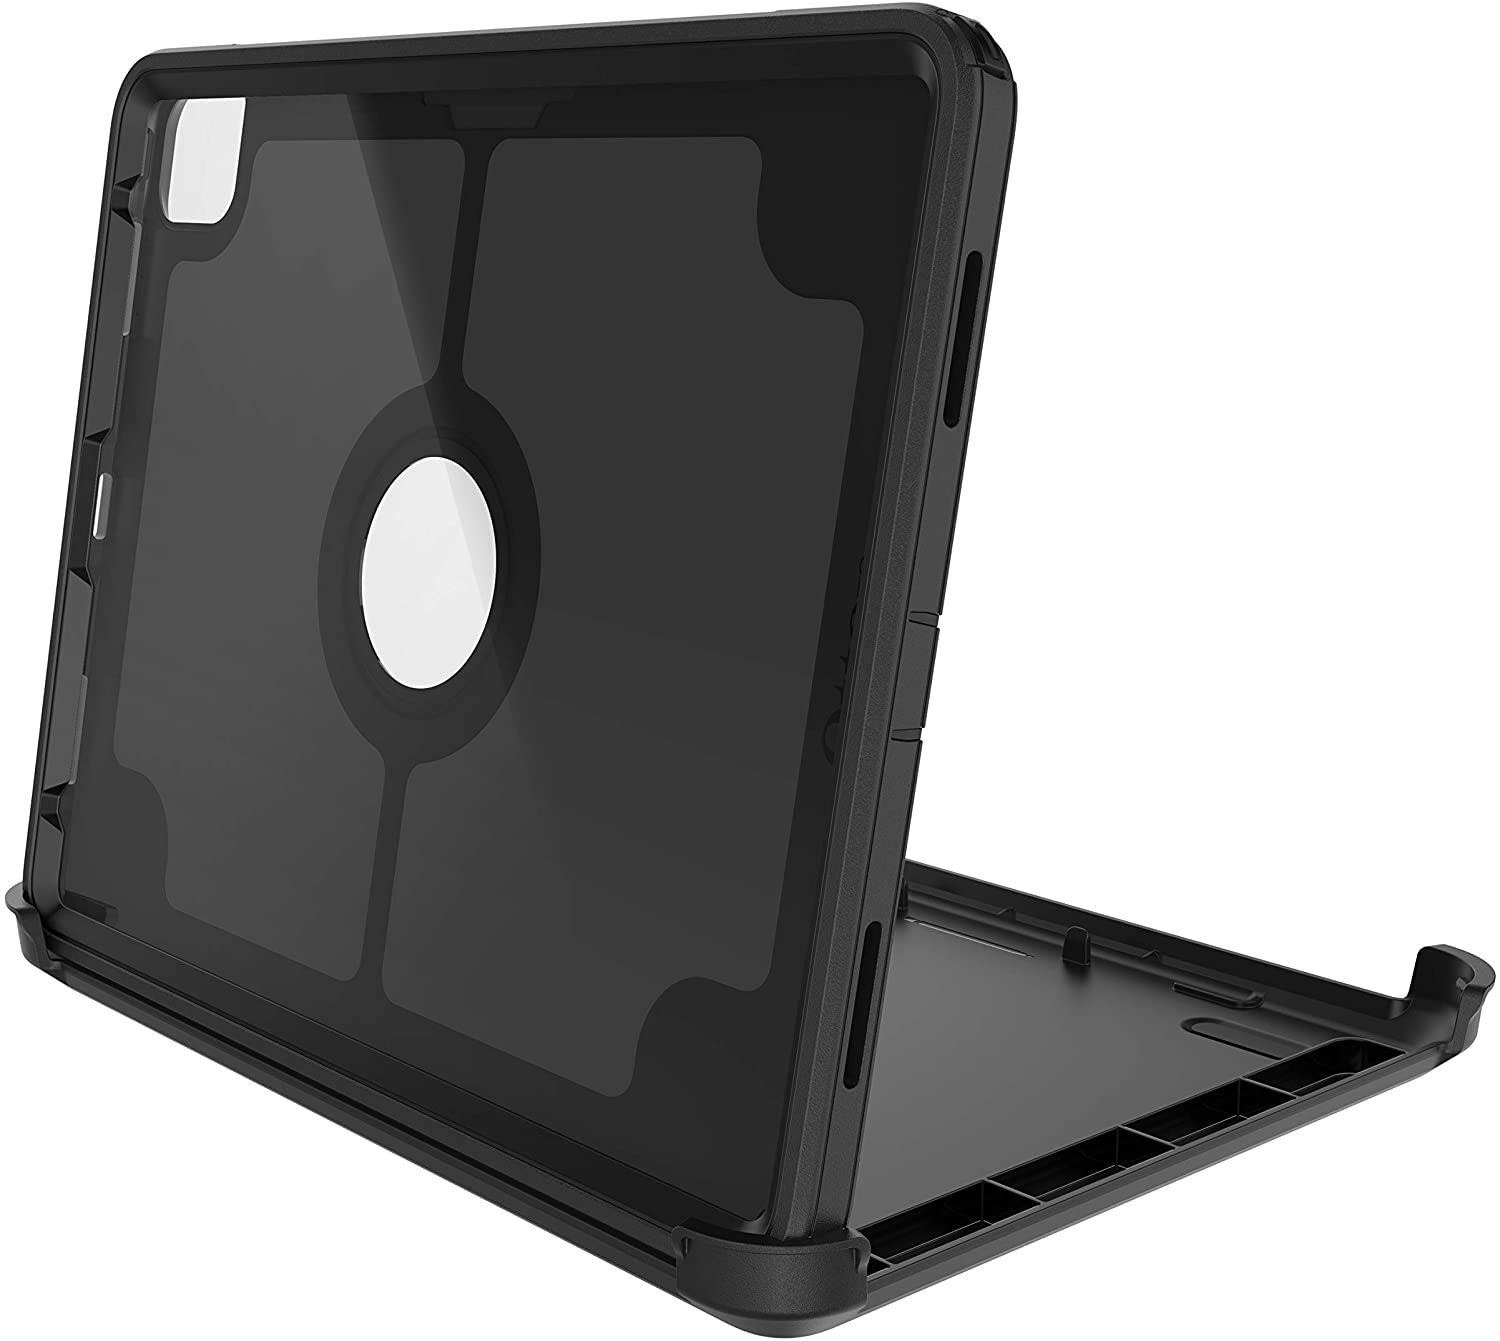 Otterbox Defender iPad Pro Case open